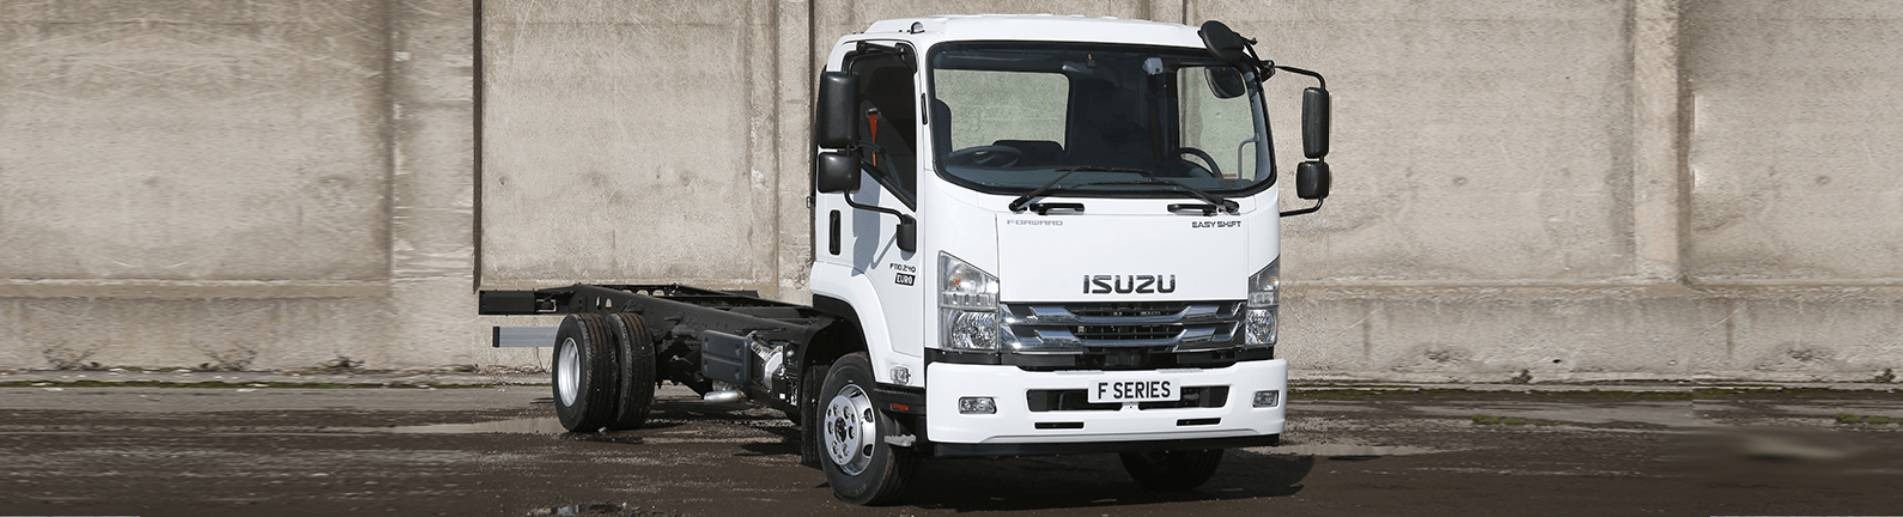 11 Tonne and 13.5 Tonne Trucks - Isuzu Trucks, Warrington